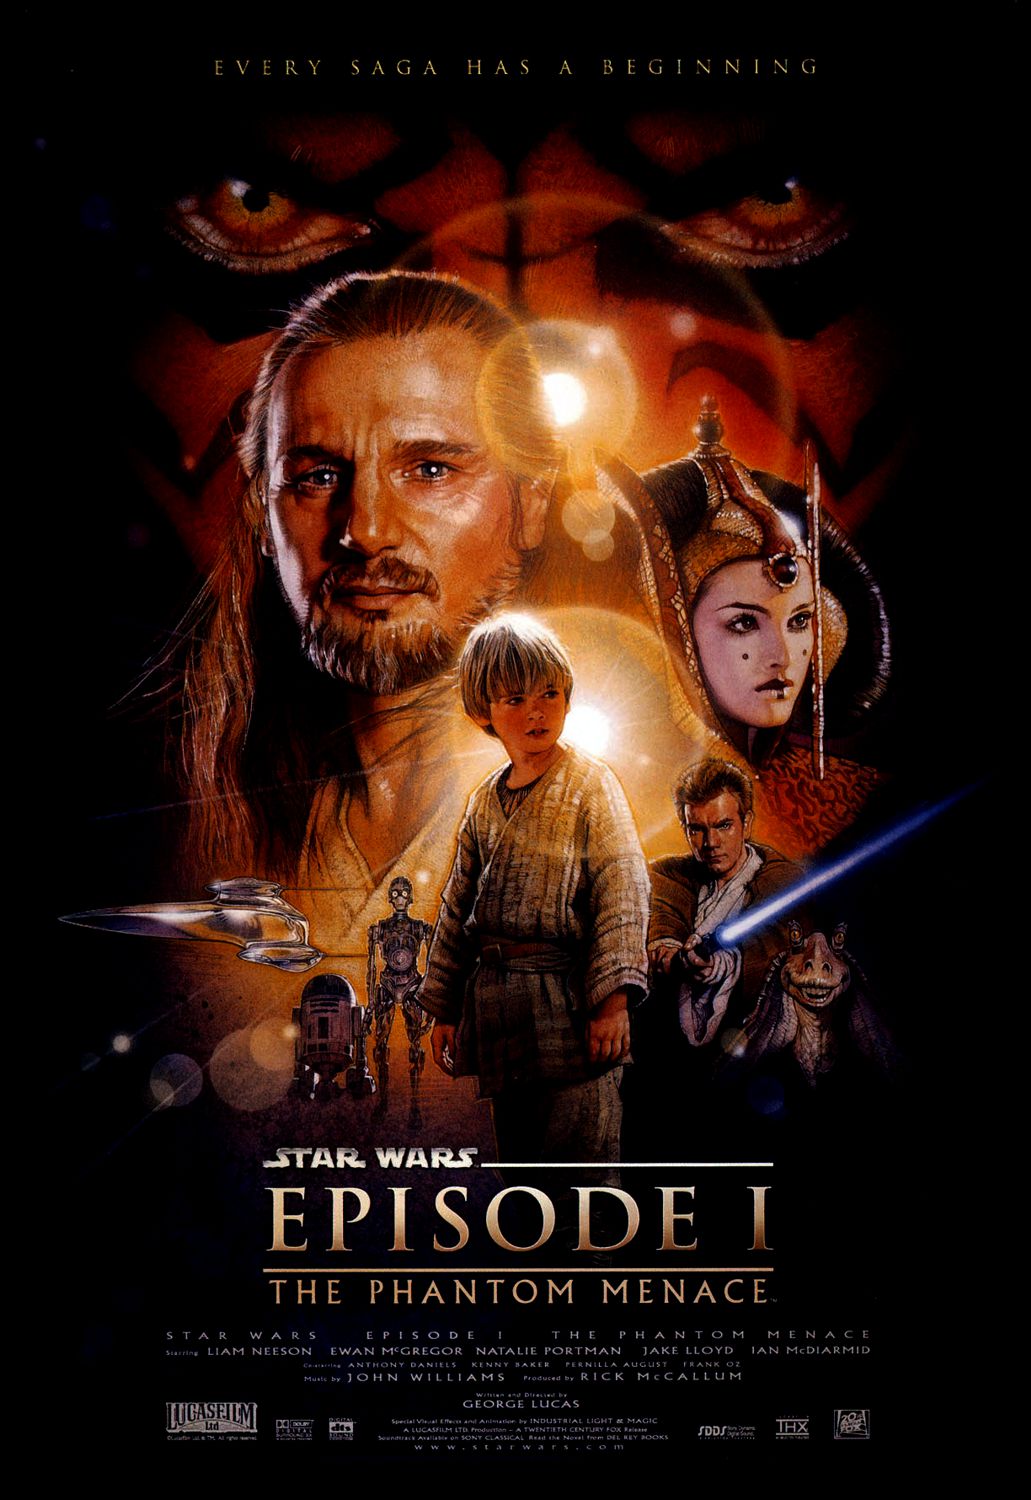 Star Wars Episode I: The Phantom Menace Backgrounds, Compatible - PC, Mobile, Gadgets| 1031x1500 px